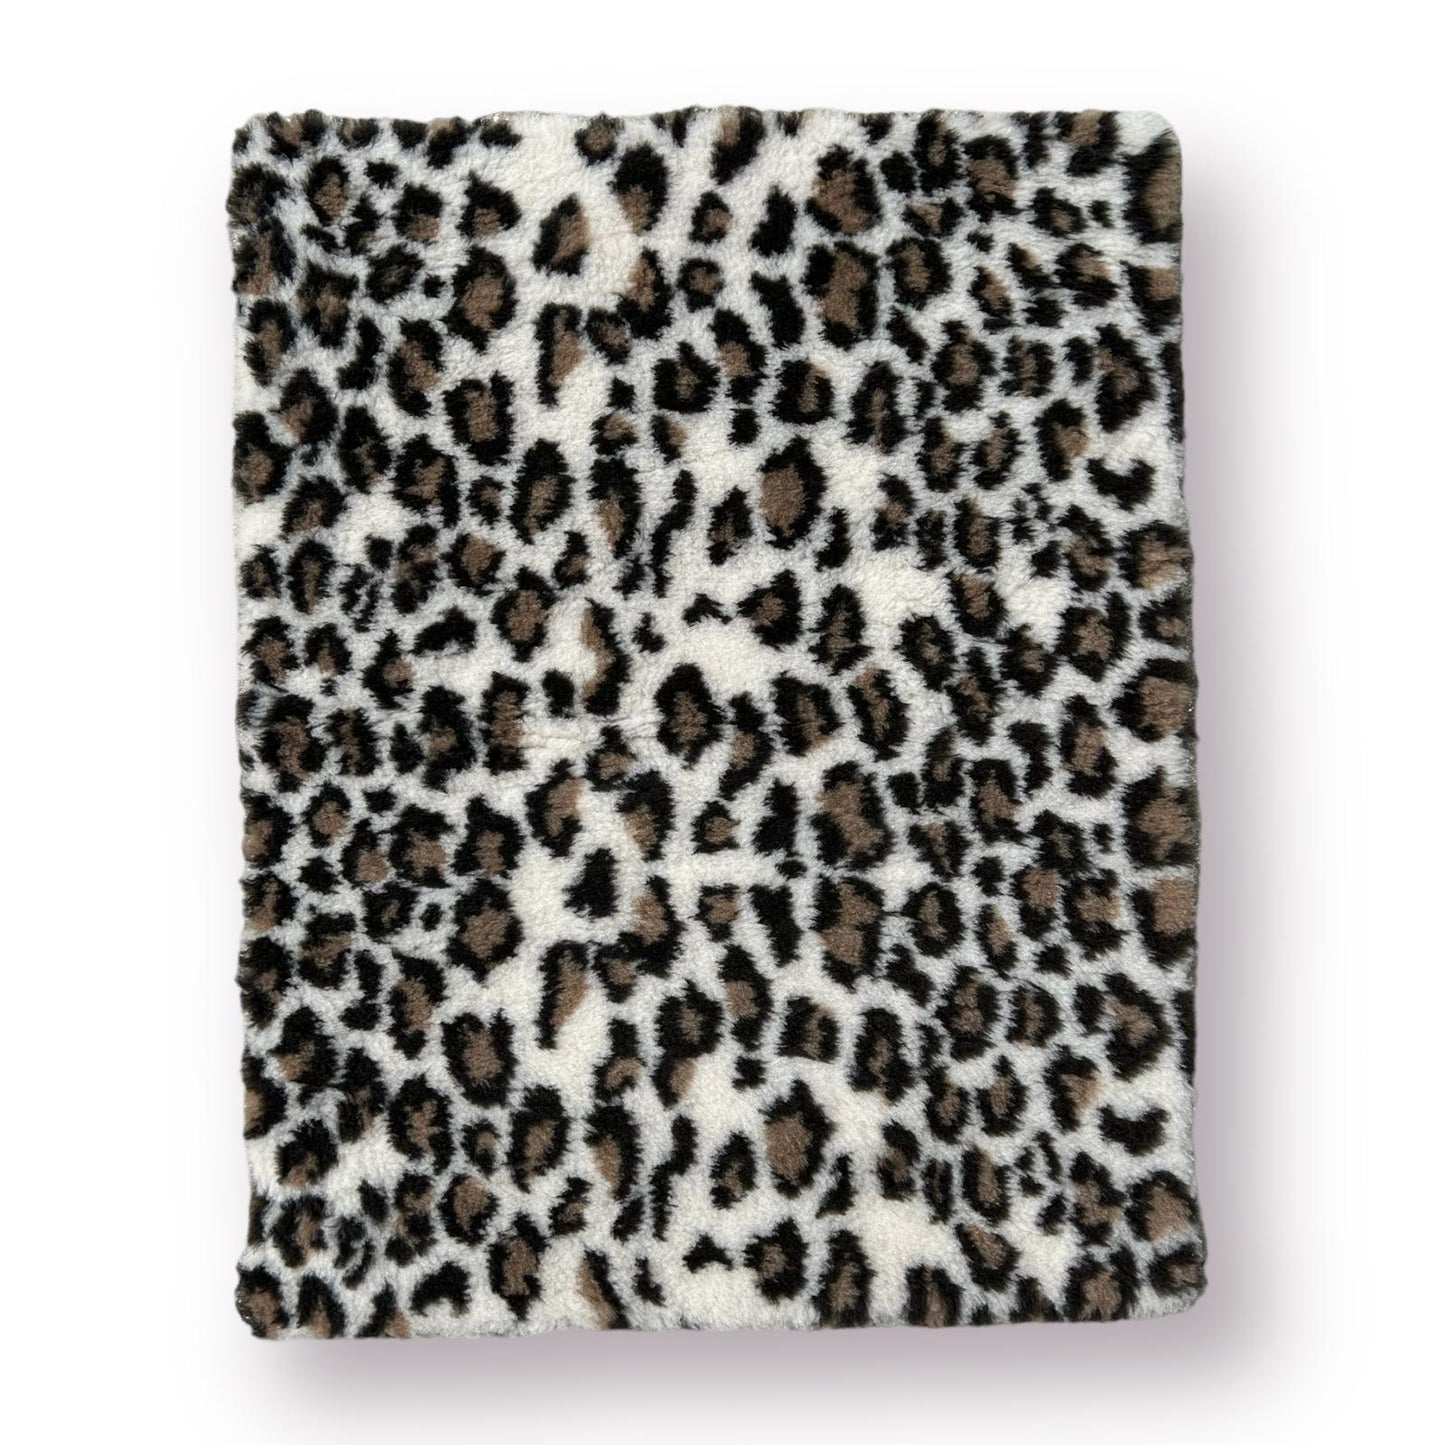 Vetbed: Leopardprint, creme bund.